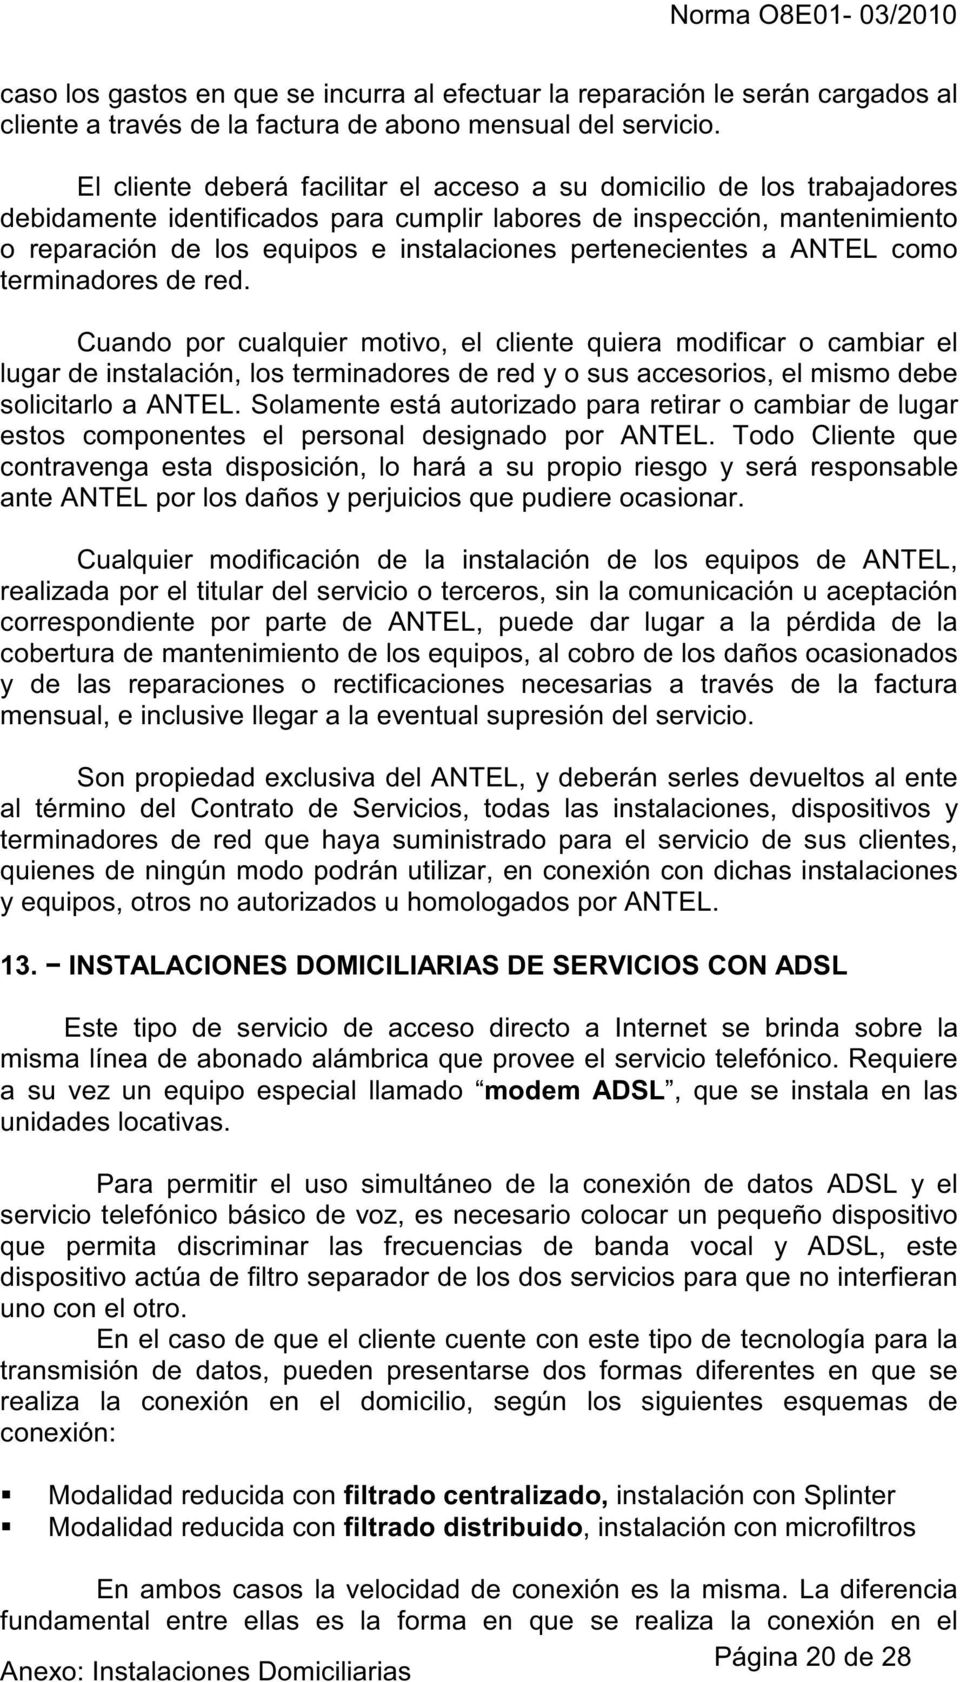 pertenecientes a ANTEL como terminadores de red.